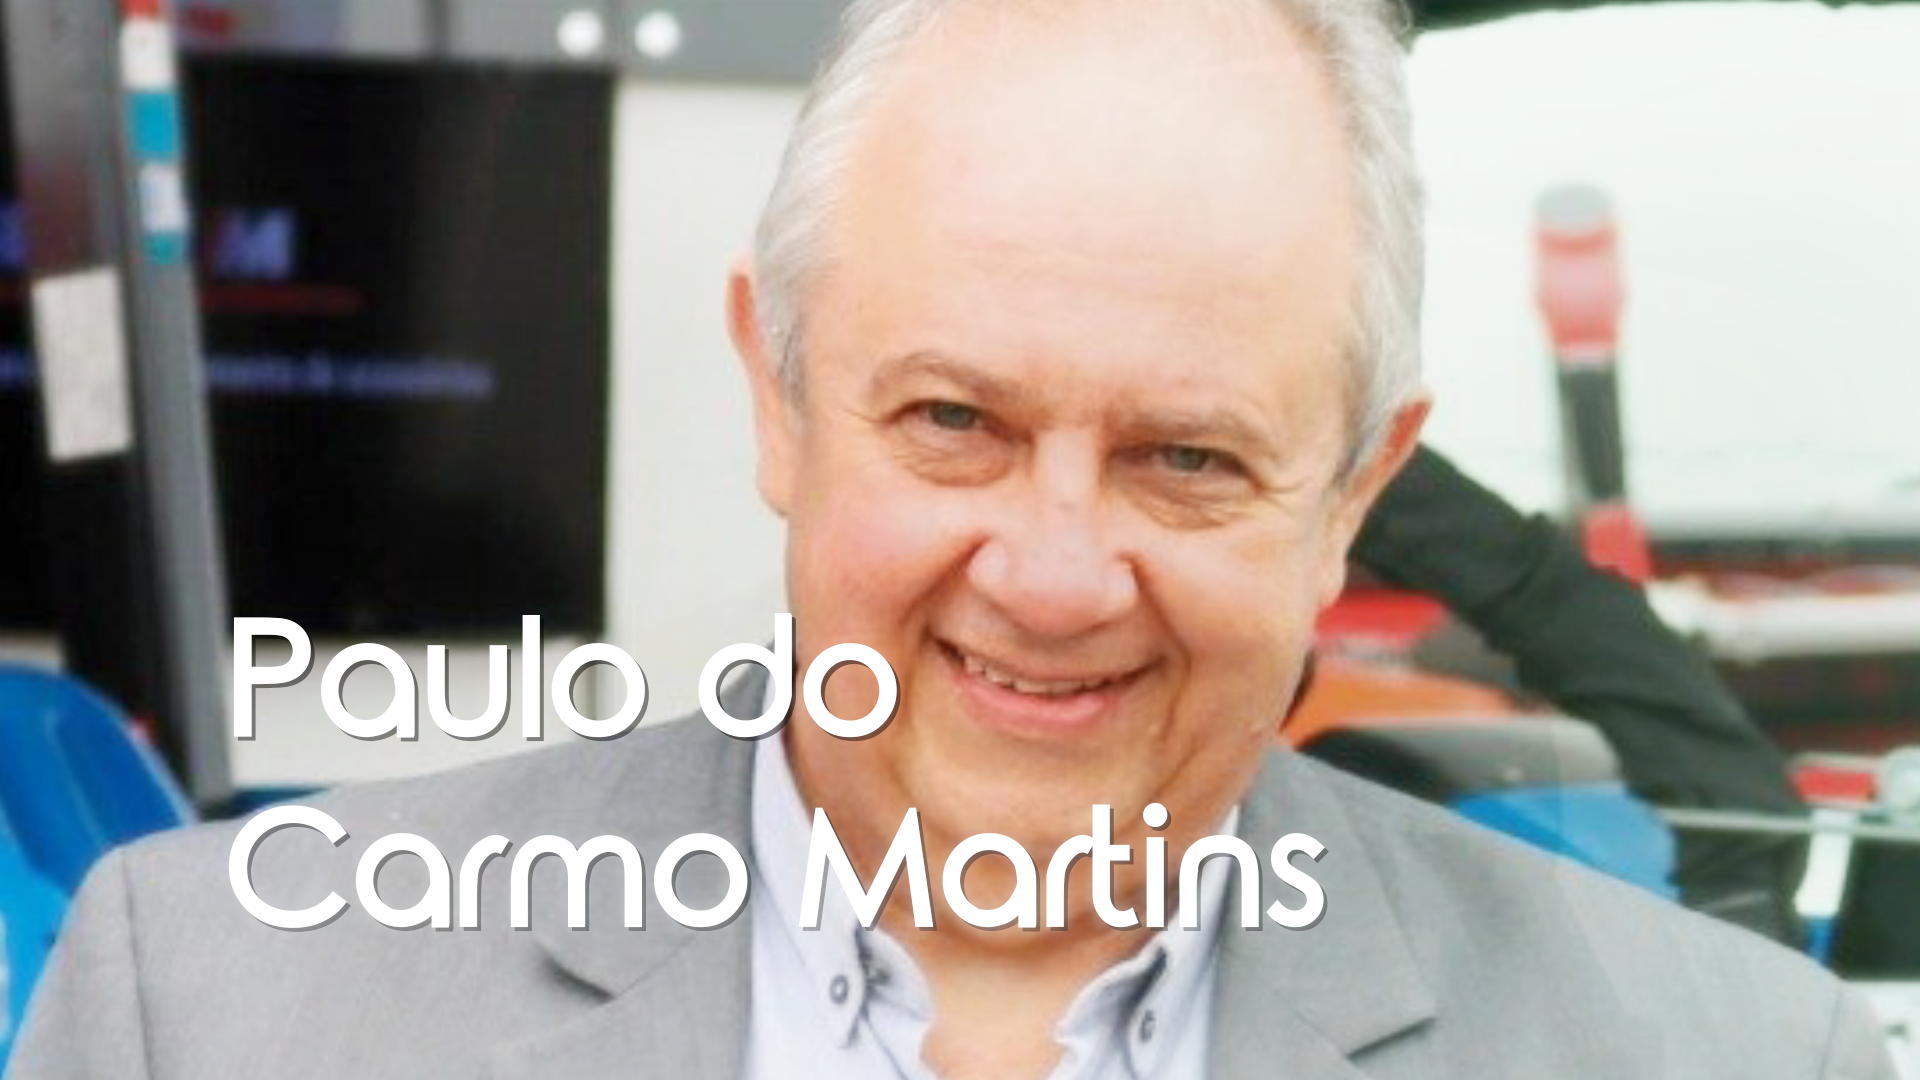 Paulo Do Carmo Martins_00000